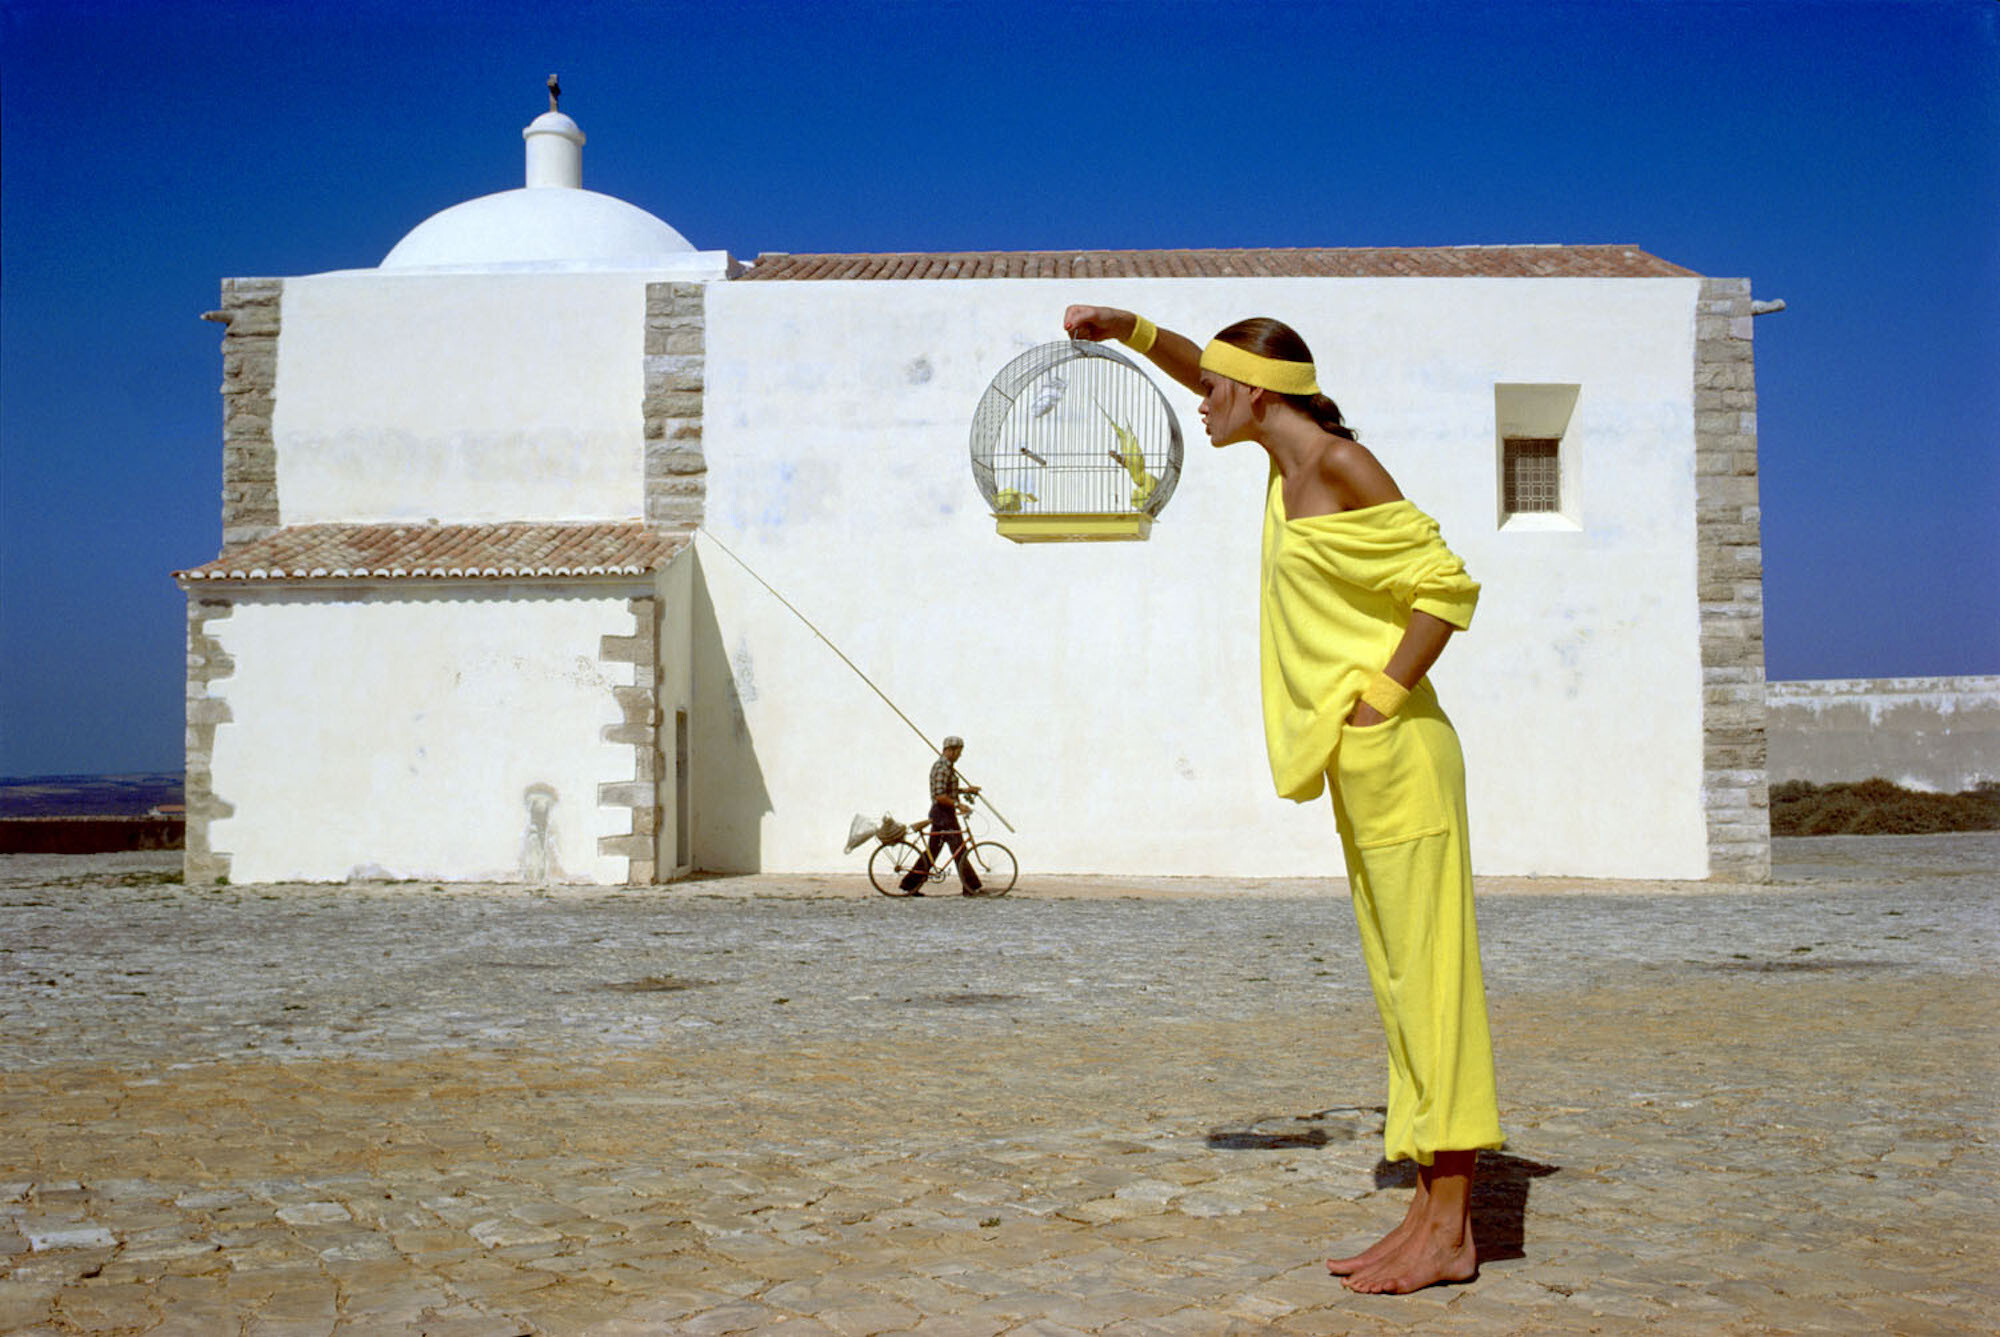 Джули Фостер, Португалия, 1977 год. Фотограф Альберт Уотсон